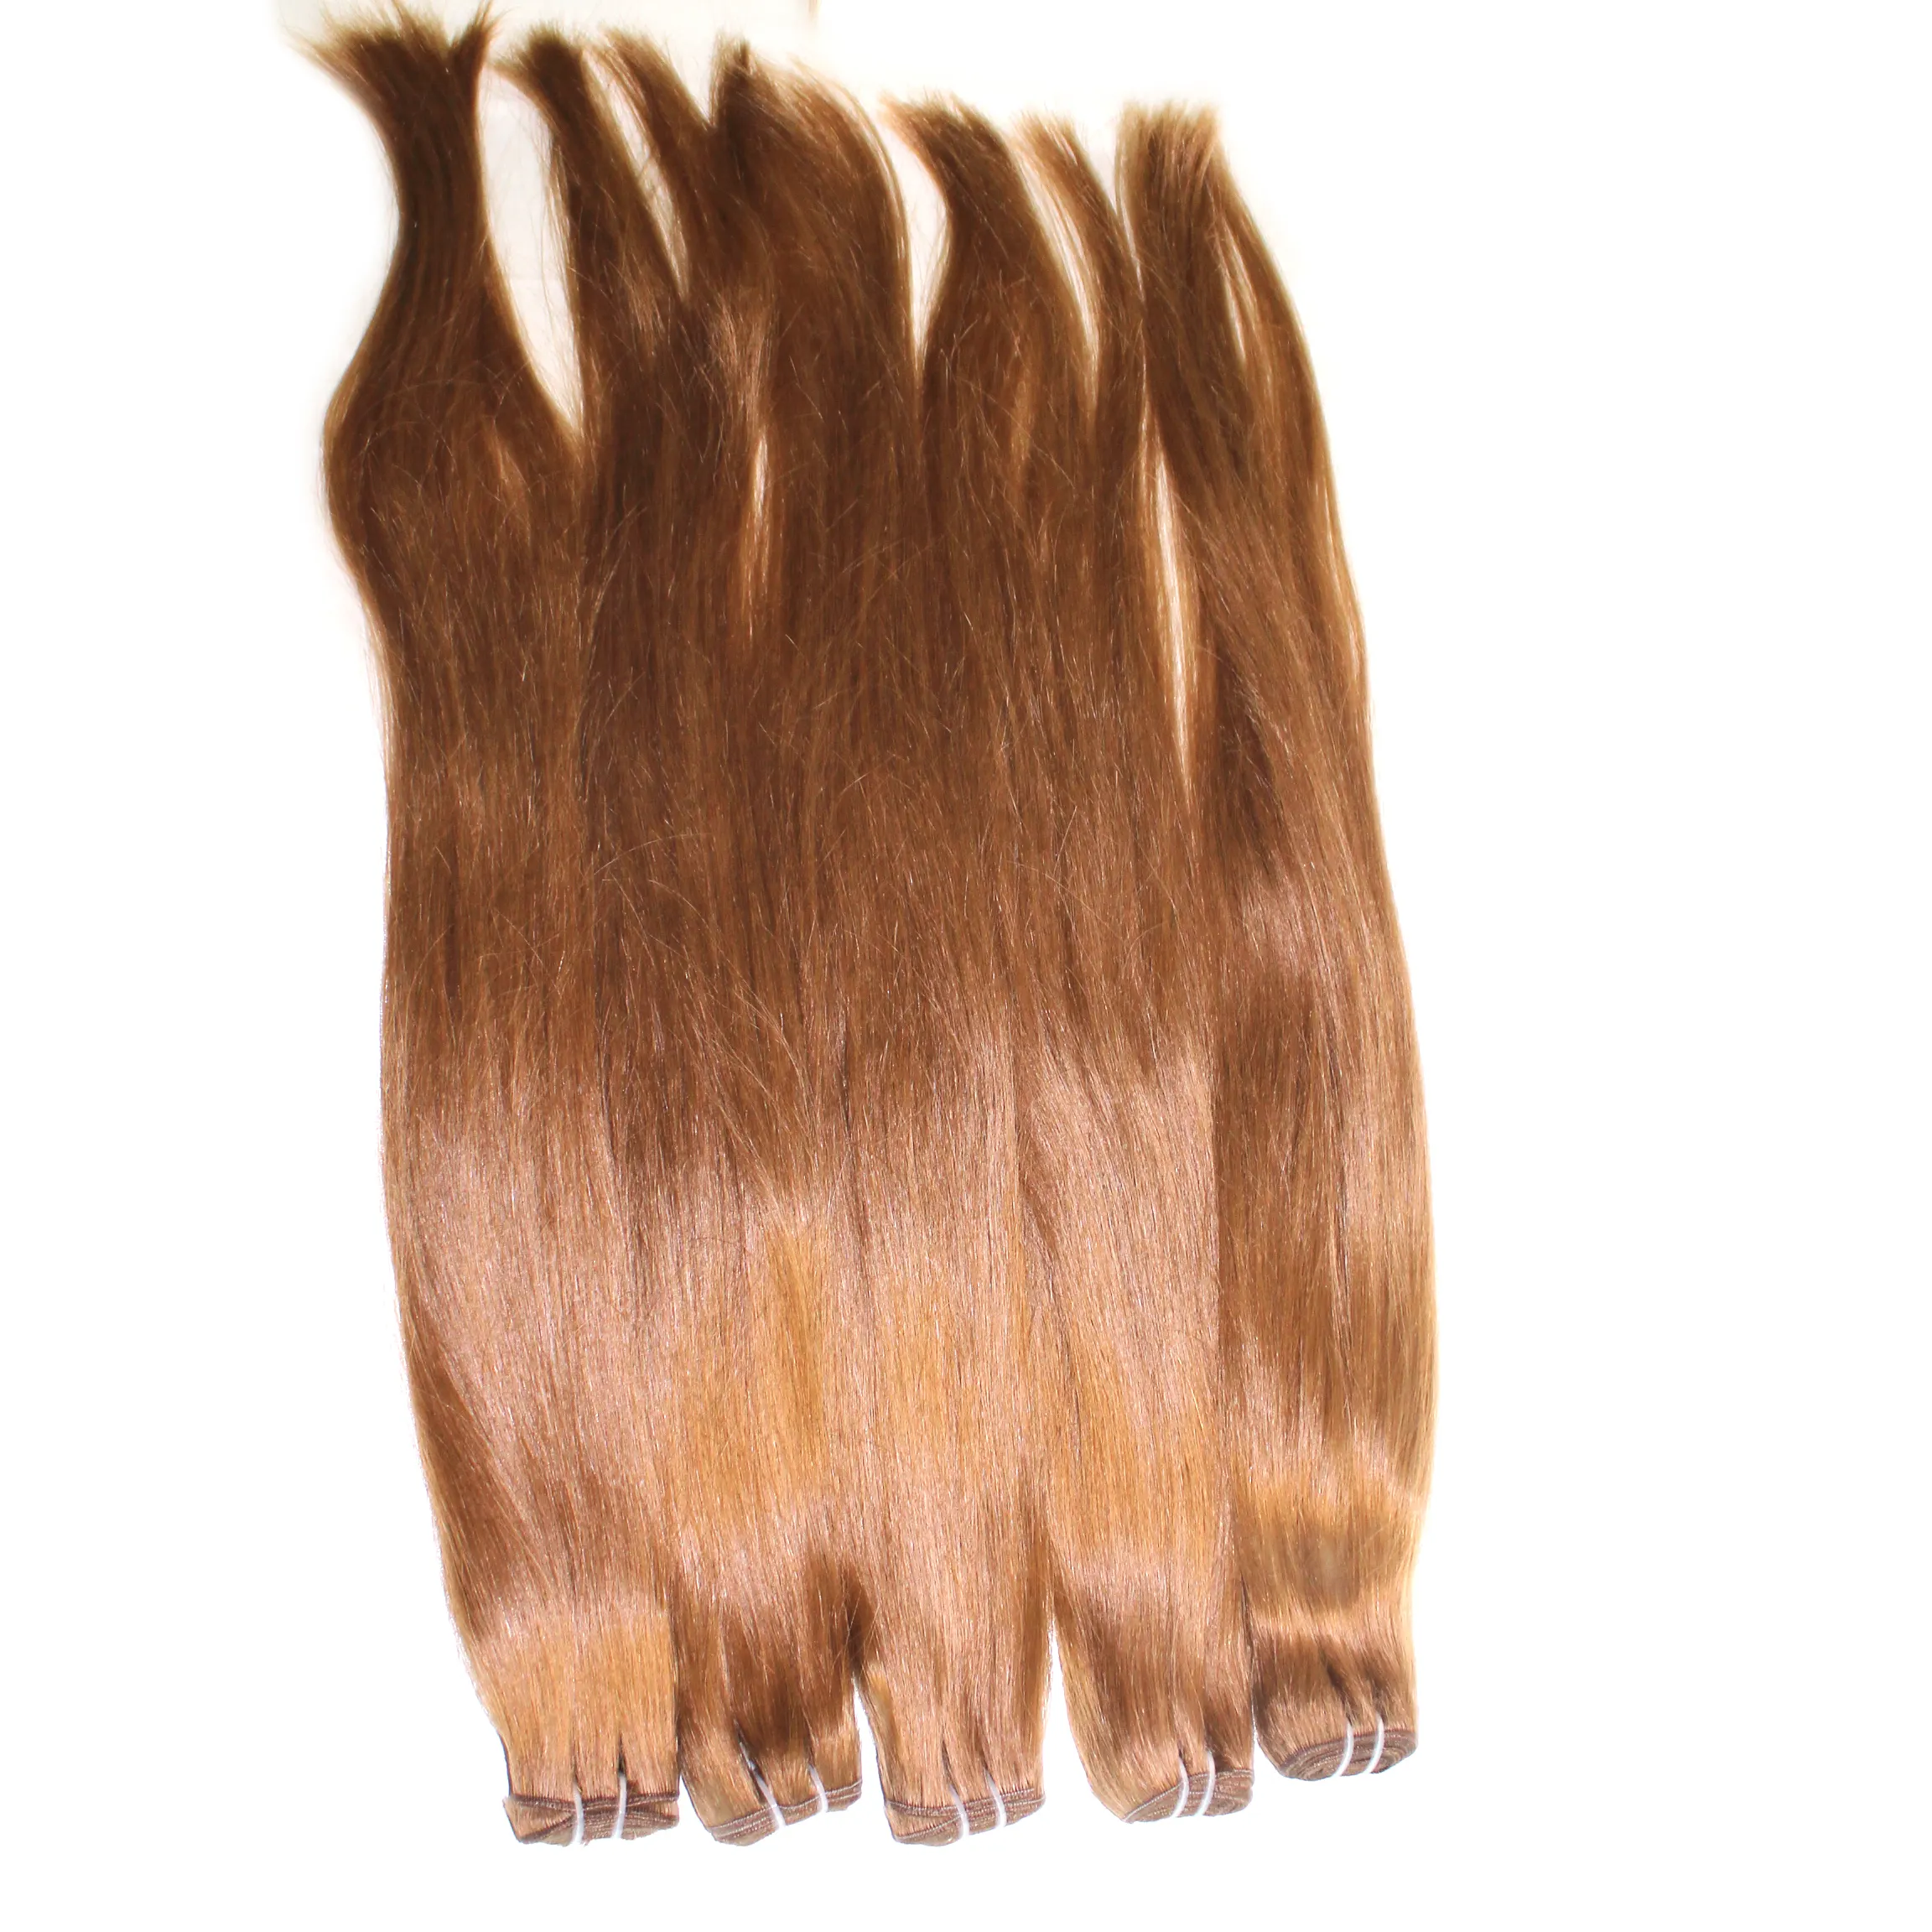 High Quality brown color human hair bundles 100%, Wholesale genius weft Body Wave Brown #30 Colored Hair Bundles